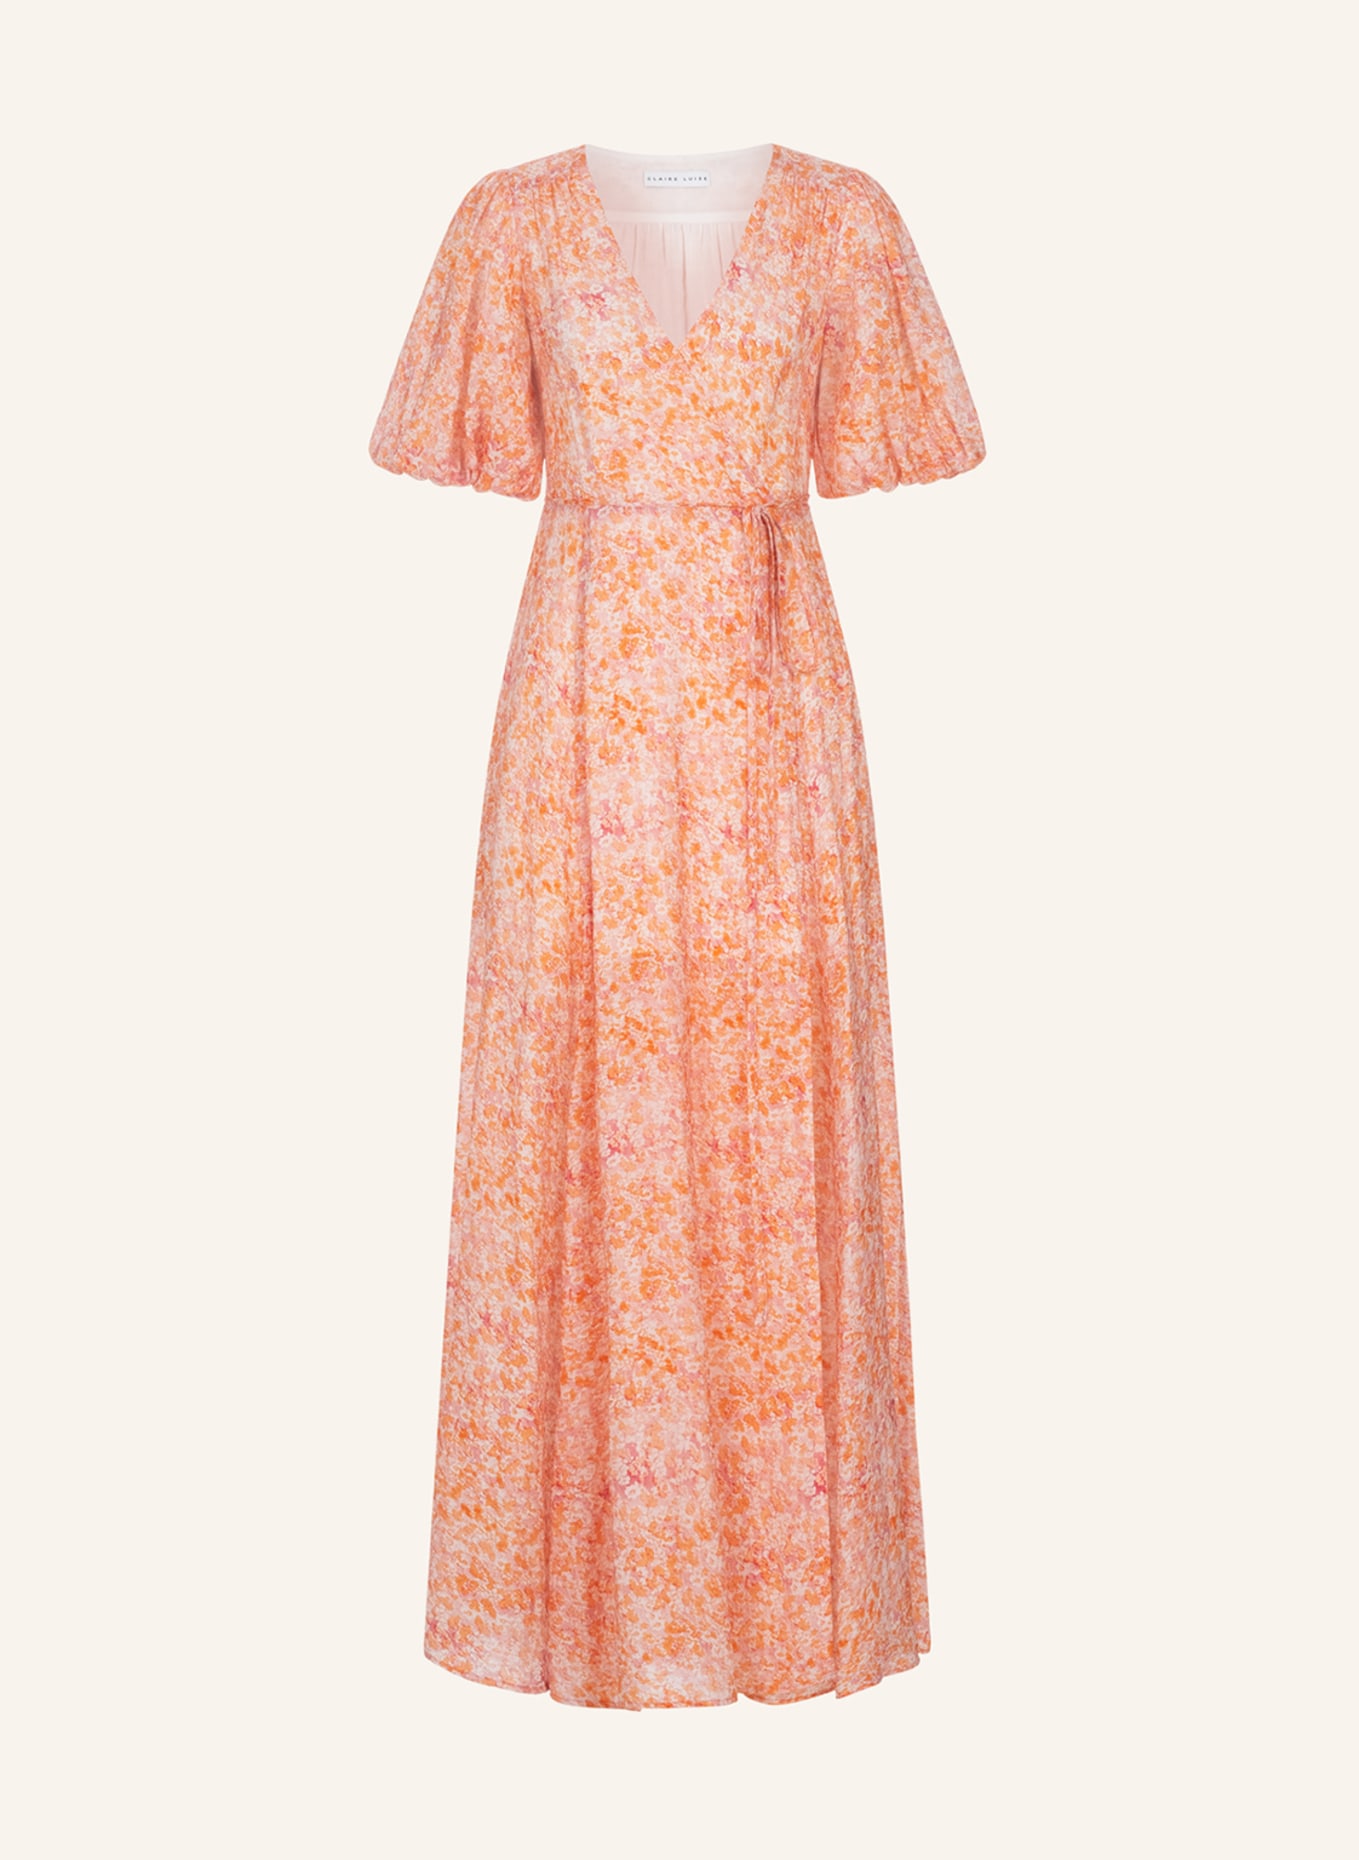 CLAIRE LUISE Kleid, Farbe: ORANGE (Bild 1)